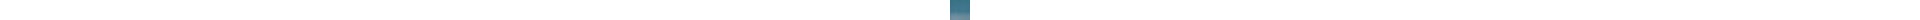 CRAIE GRAPHITE XL DERWENT LA PIECE Teinte:Bleu de prusse